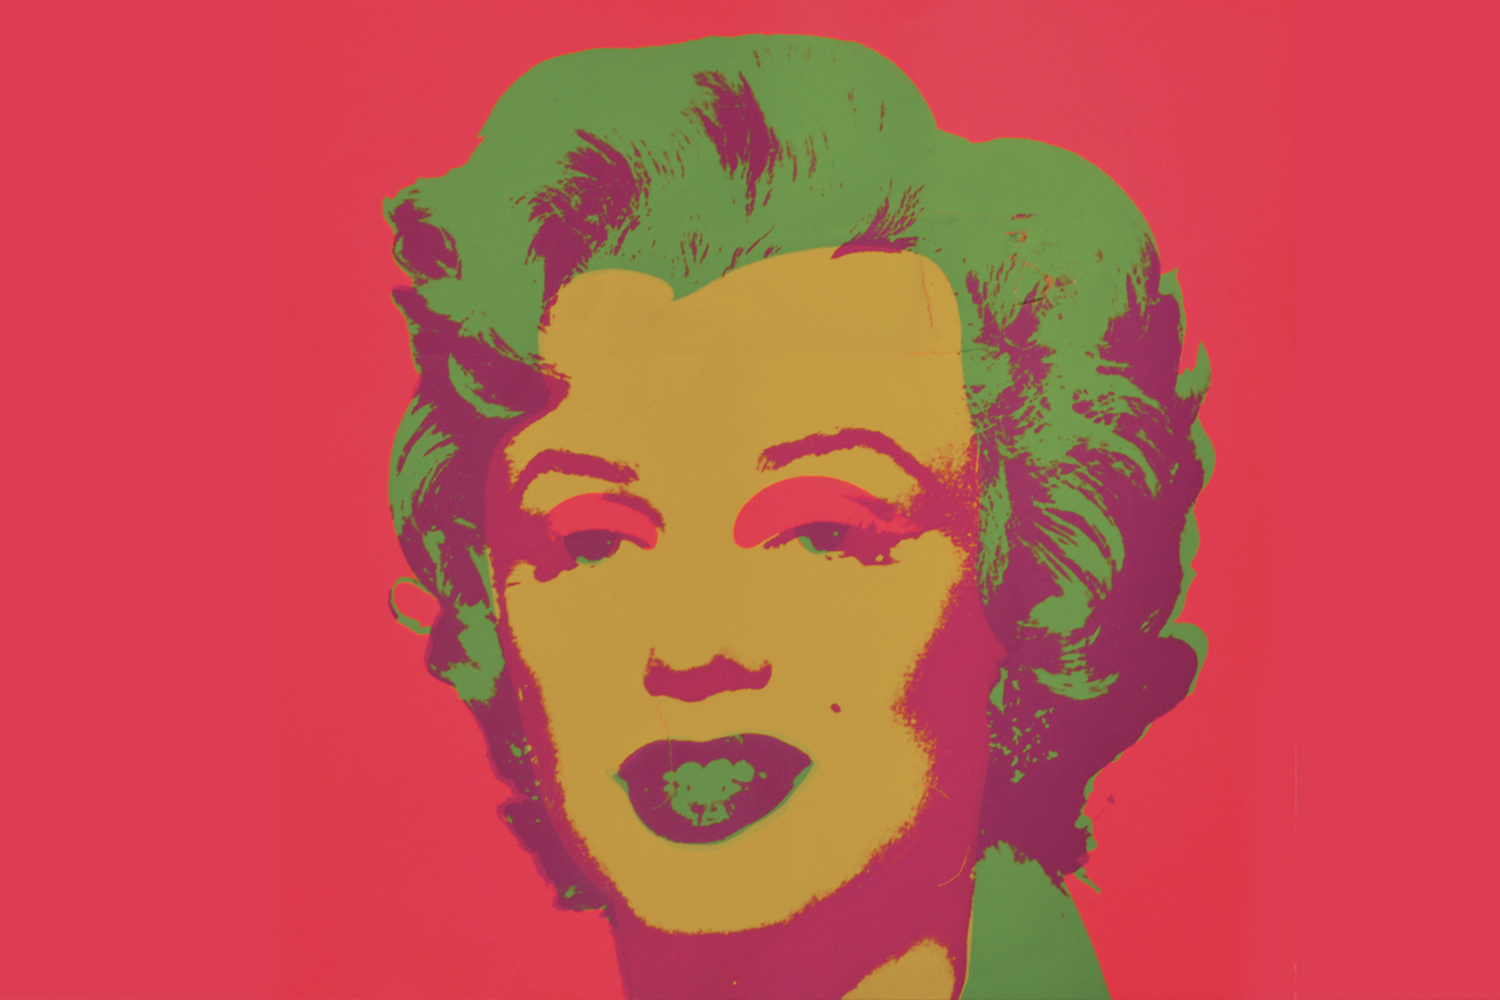 Andy Warhol's illustration